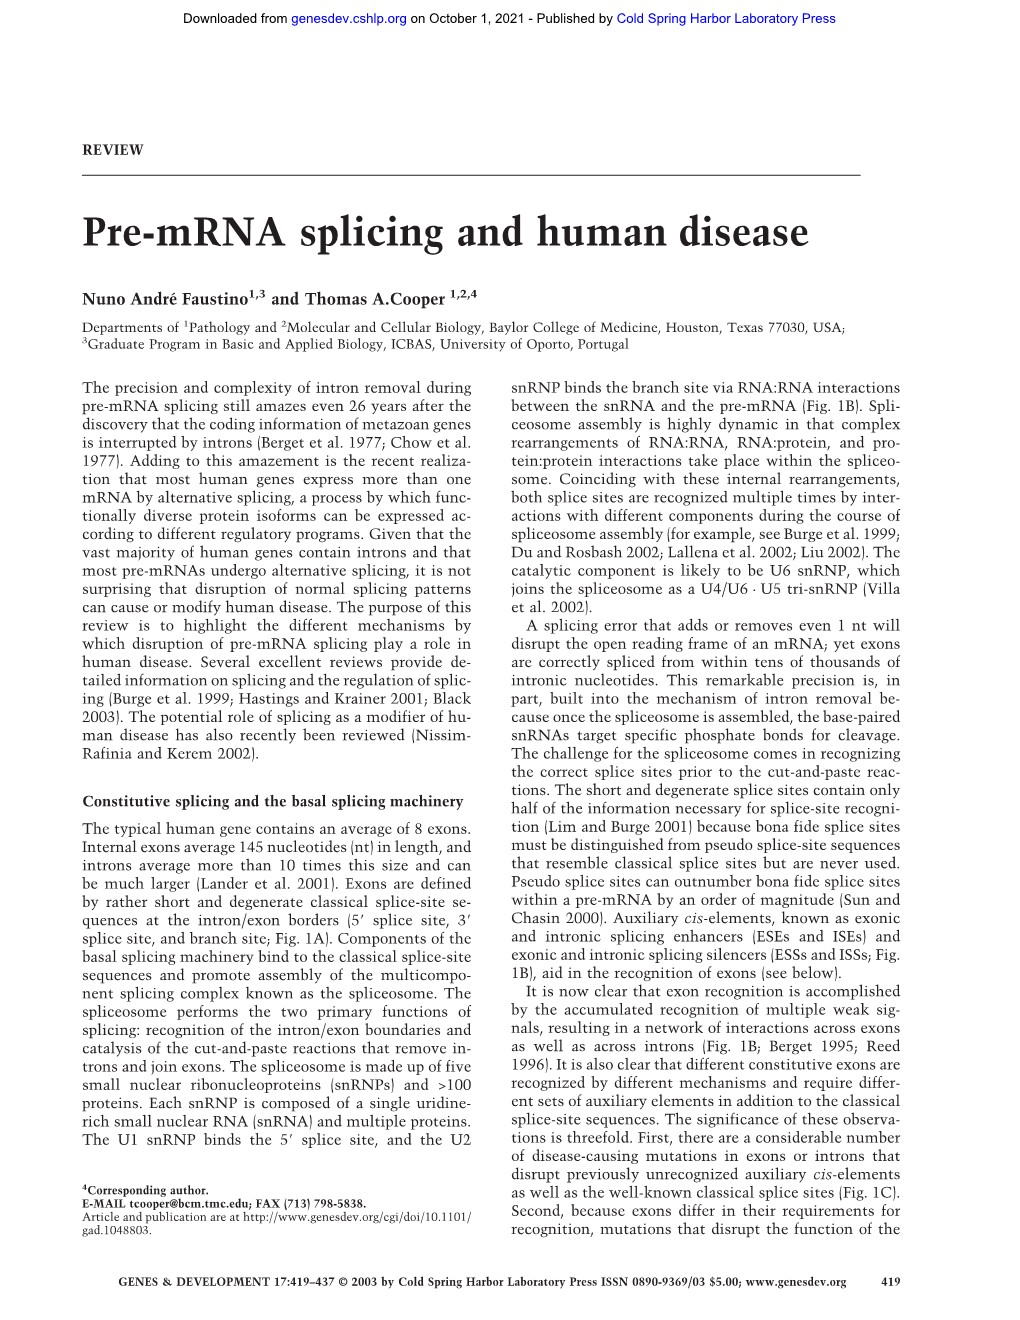 Pre-Mrna Splicing and Human Disease